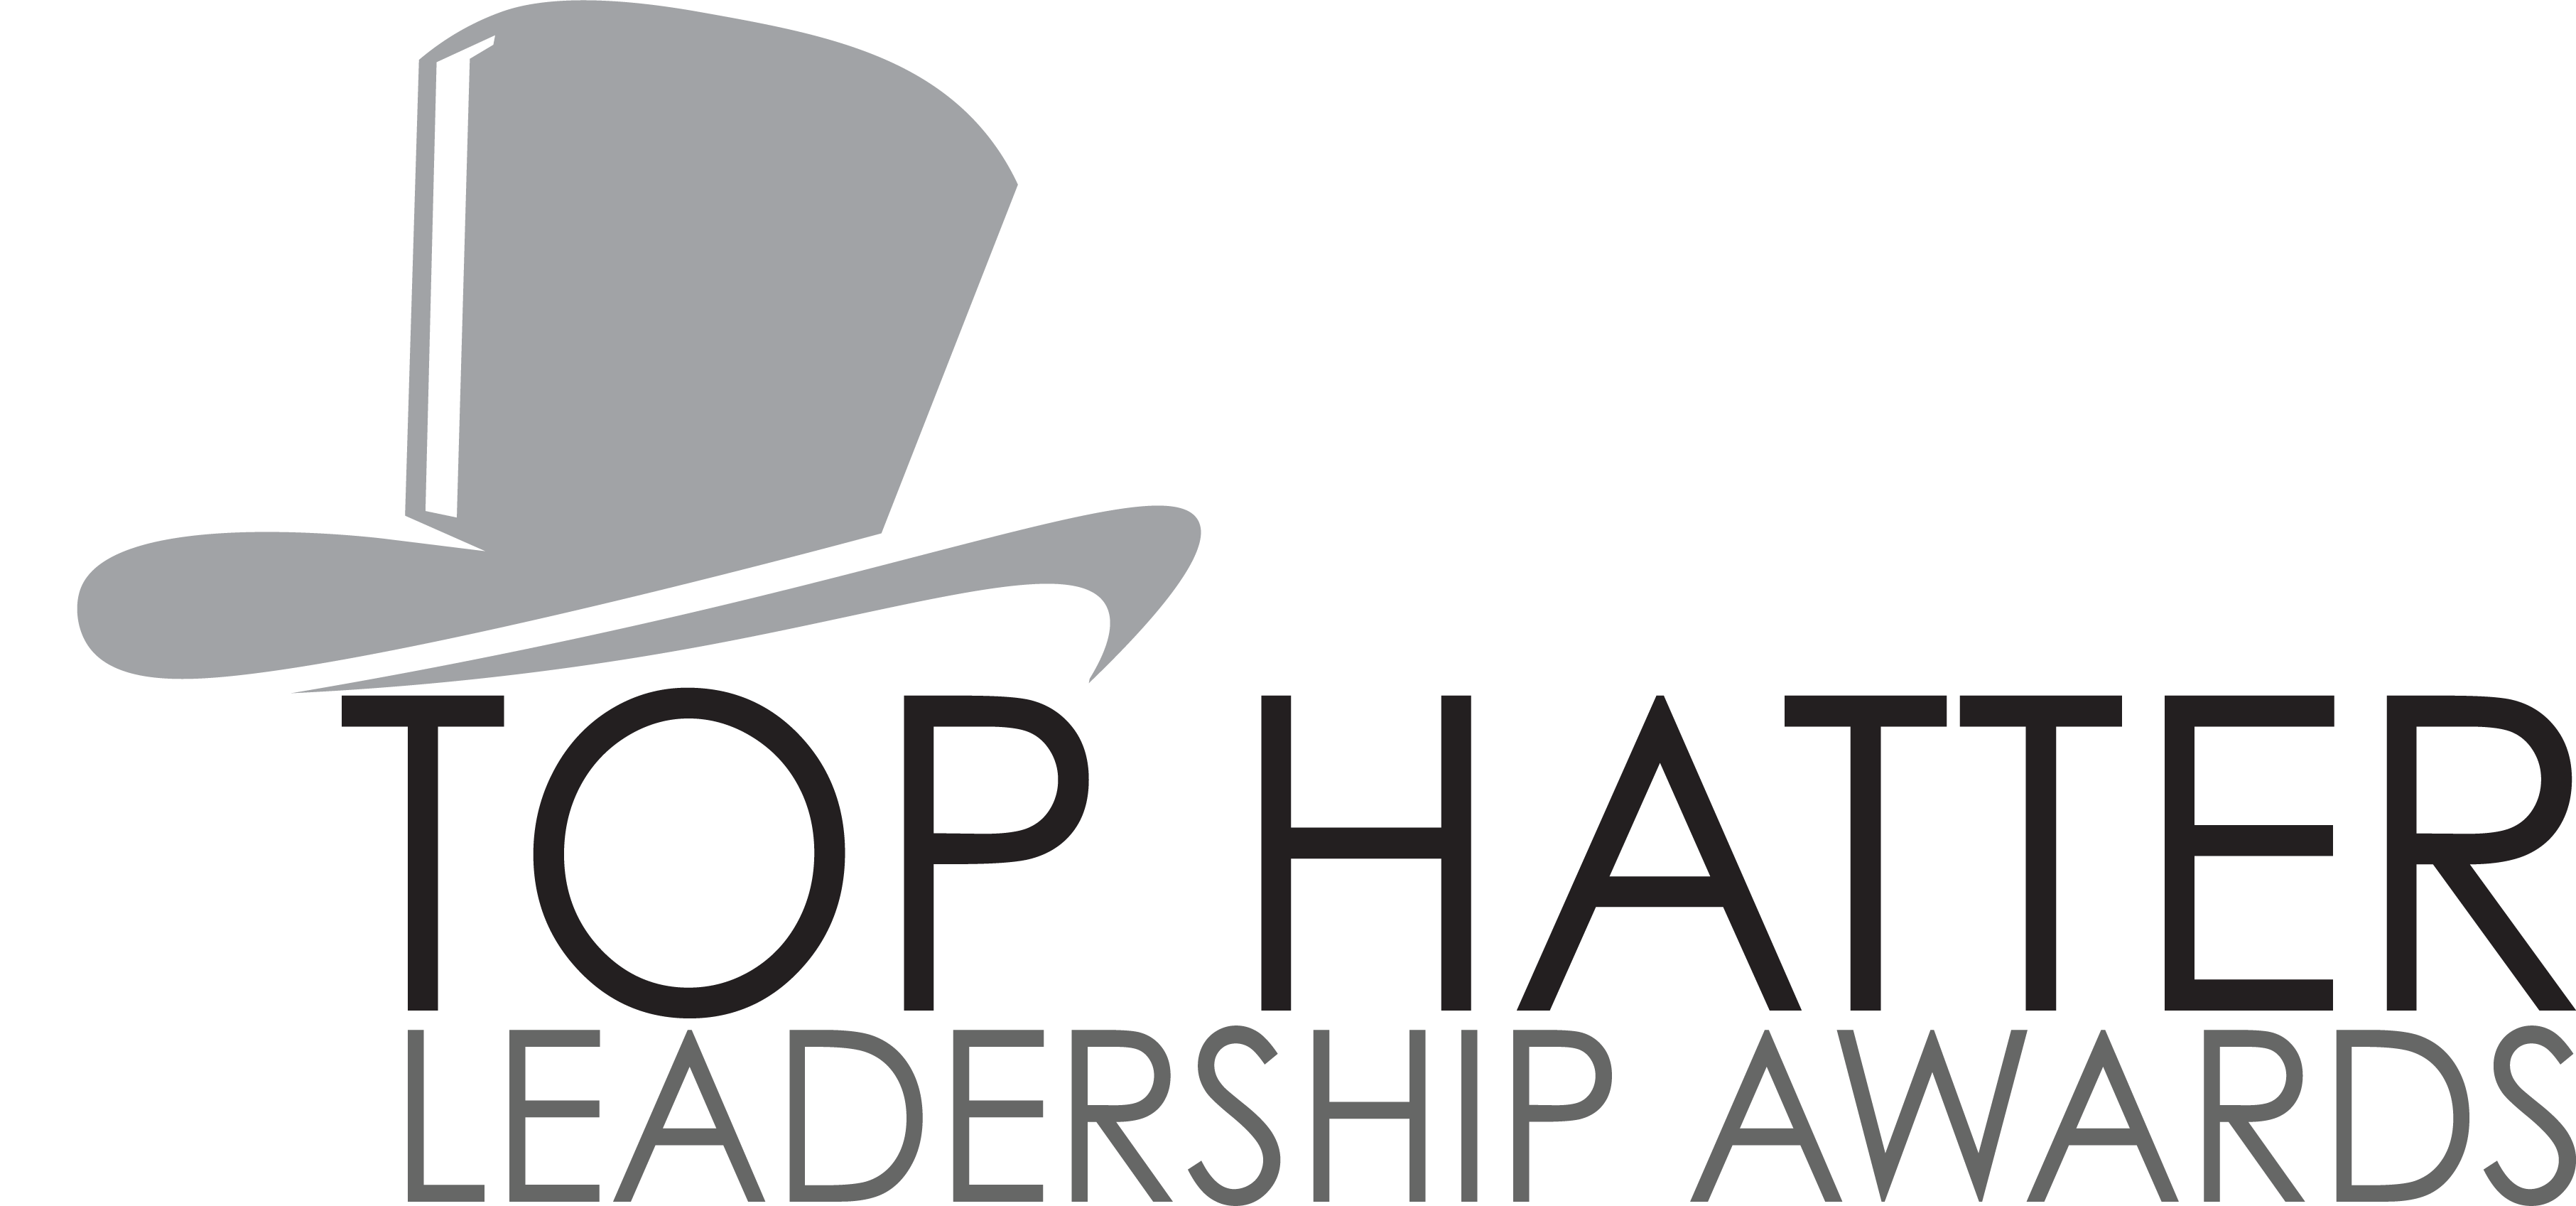 Top Hatter Leadership Awards Logo